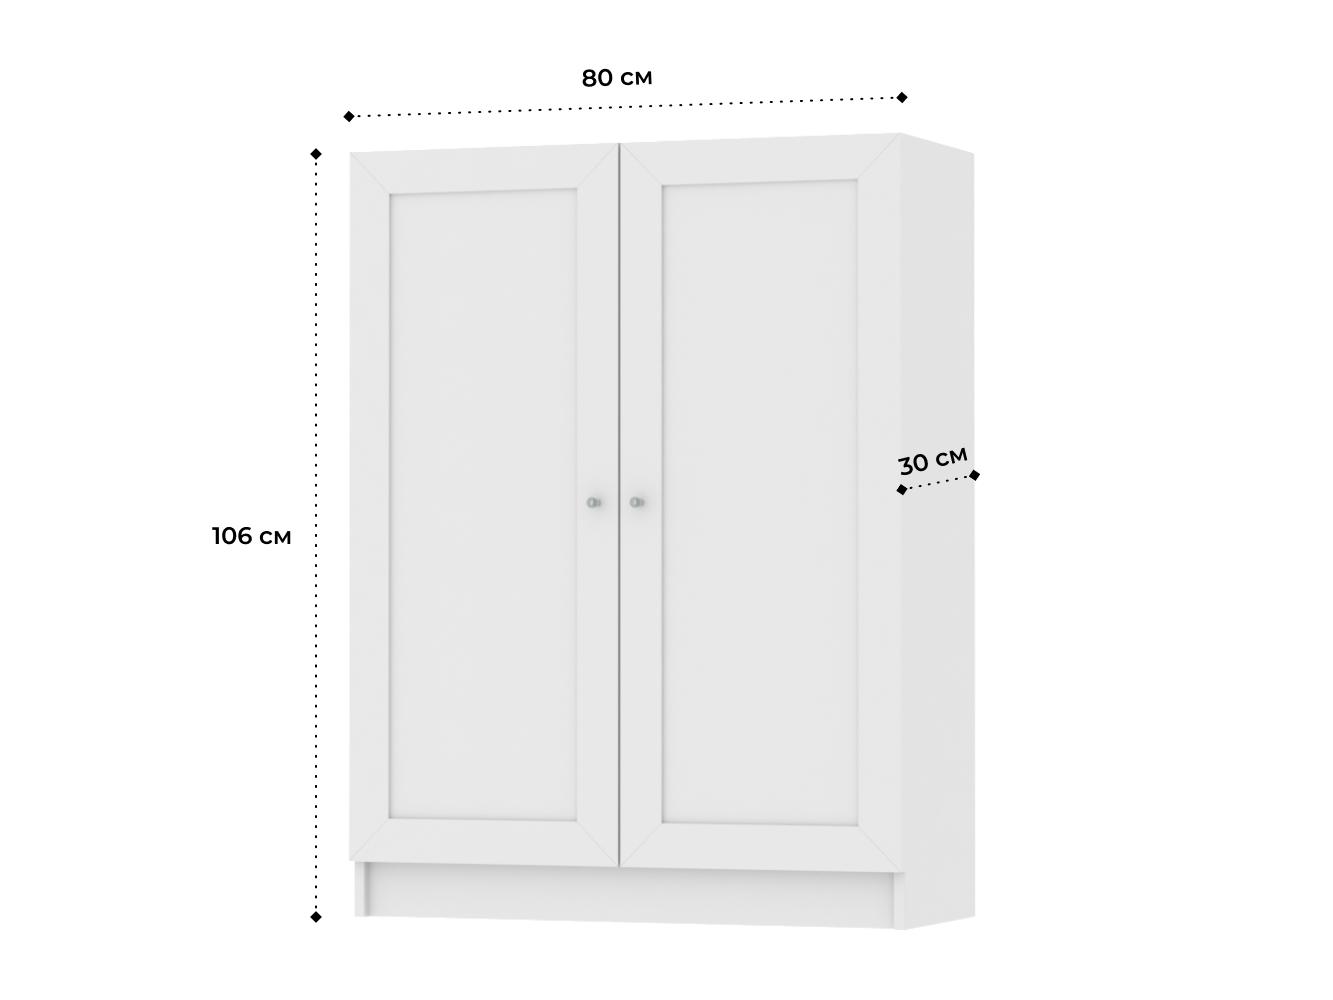 Изображение товара Комод Билли 213 white ИКЕА (IKEA), 80x30x106 см на сайте adeta.ru